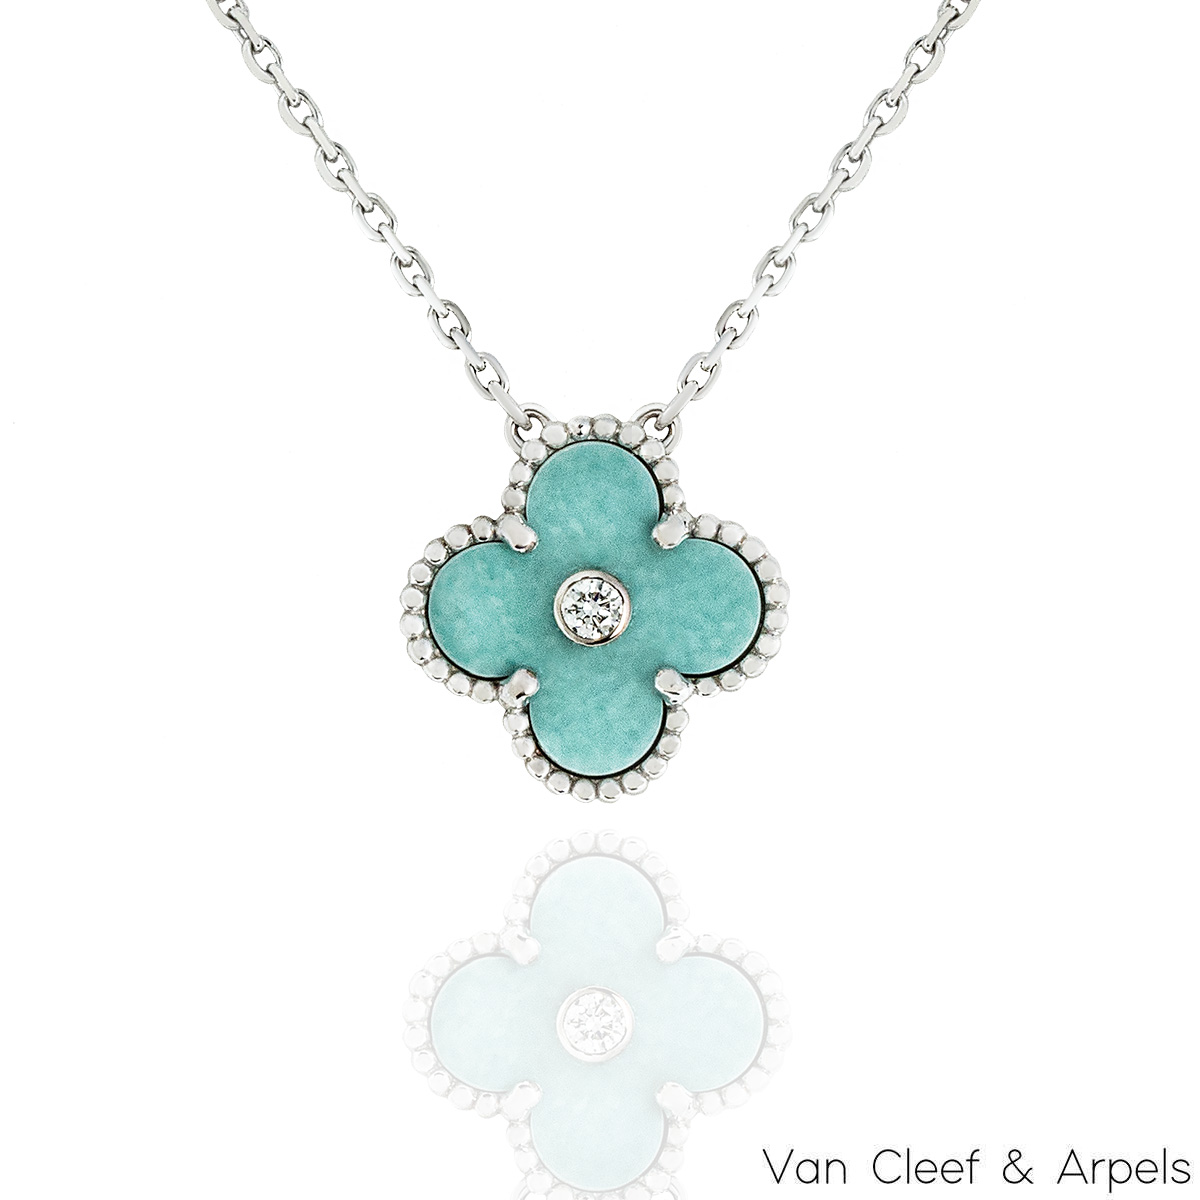 Van Cleef & Arpels Necklace 374522 | Collector Square